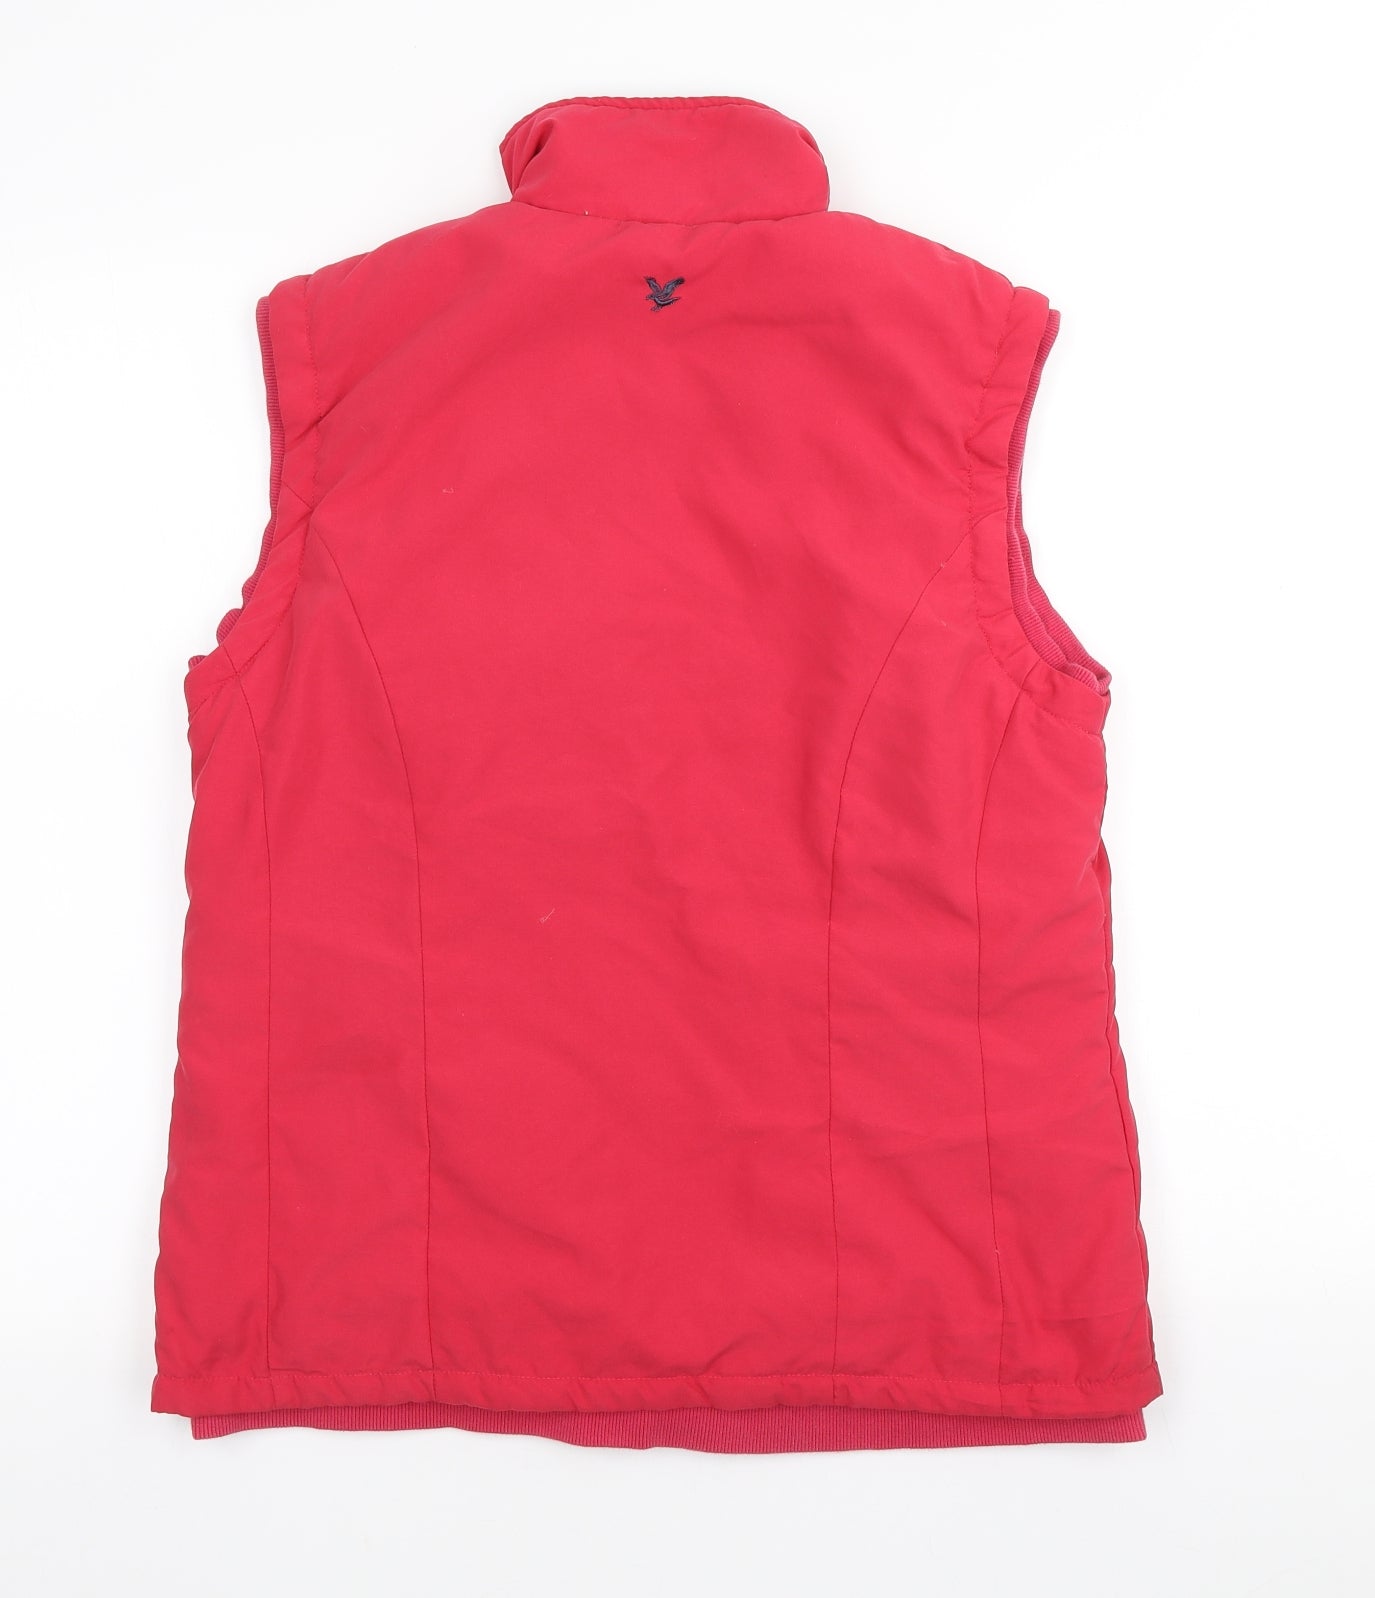 Lyle & Scott Womens Pink Gilet Jacket Size S